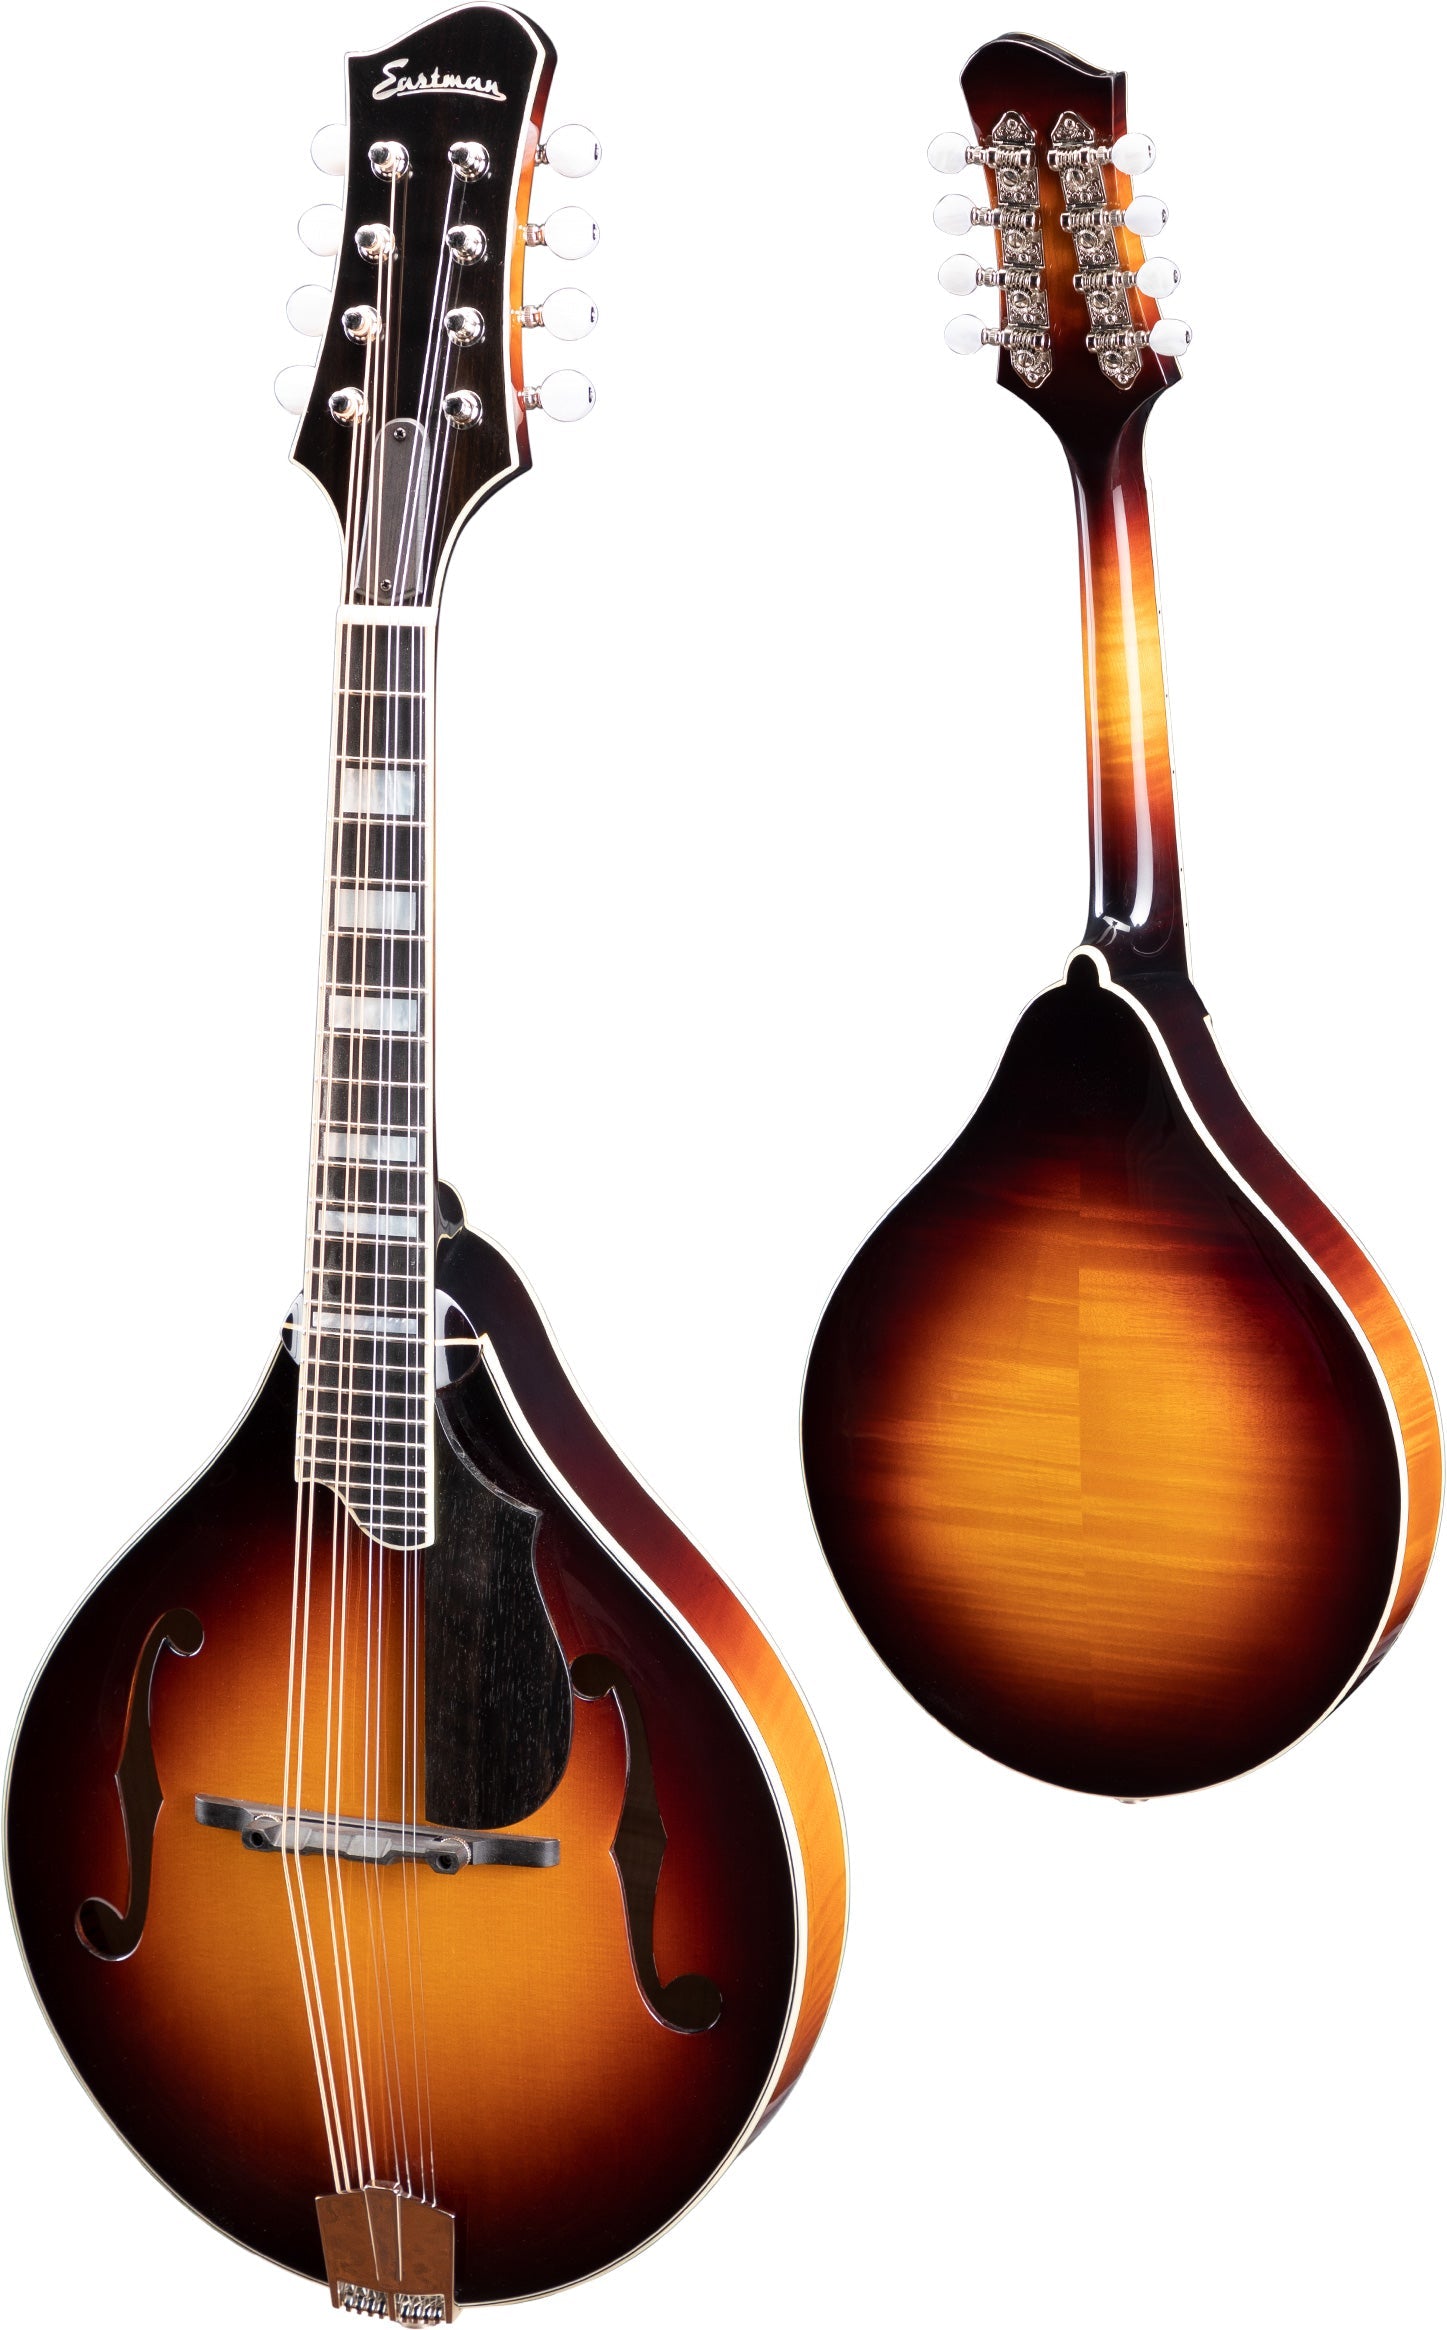 Eastman MD605 A-style F-holes Mandolin, Mandolin for sale at Richards Guitars.